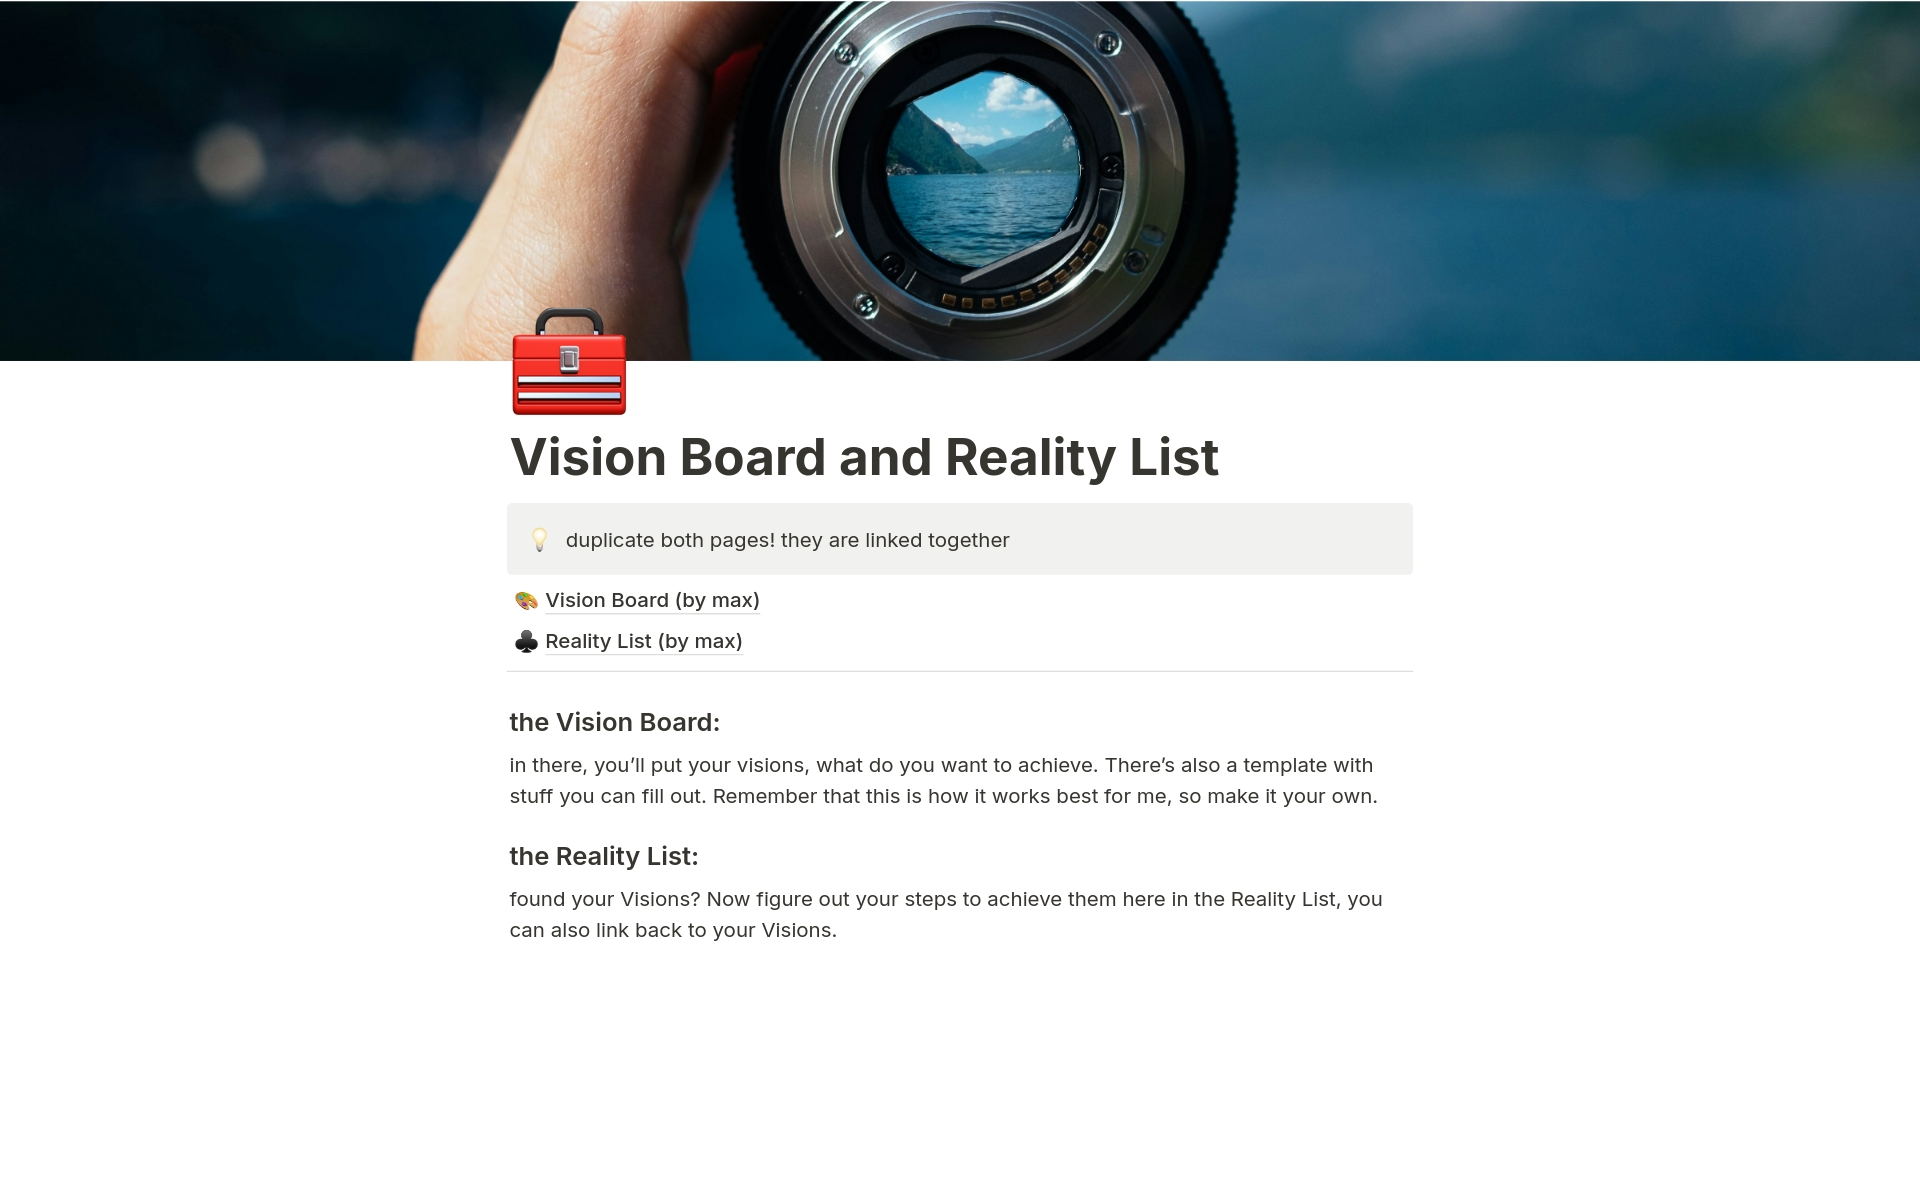 Vision Board with Reality List (by max)님의 템플릿 미리보기